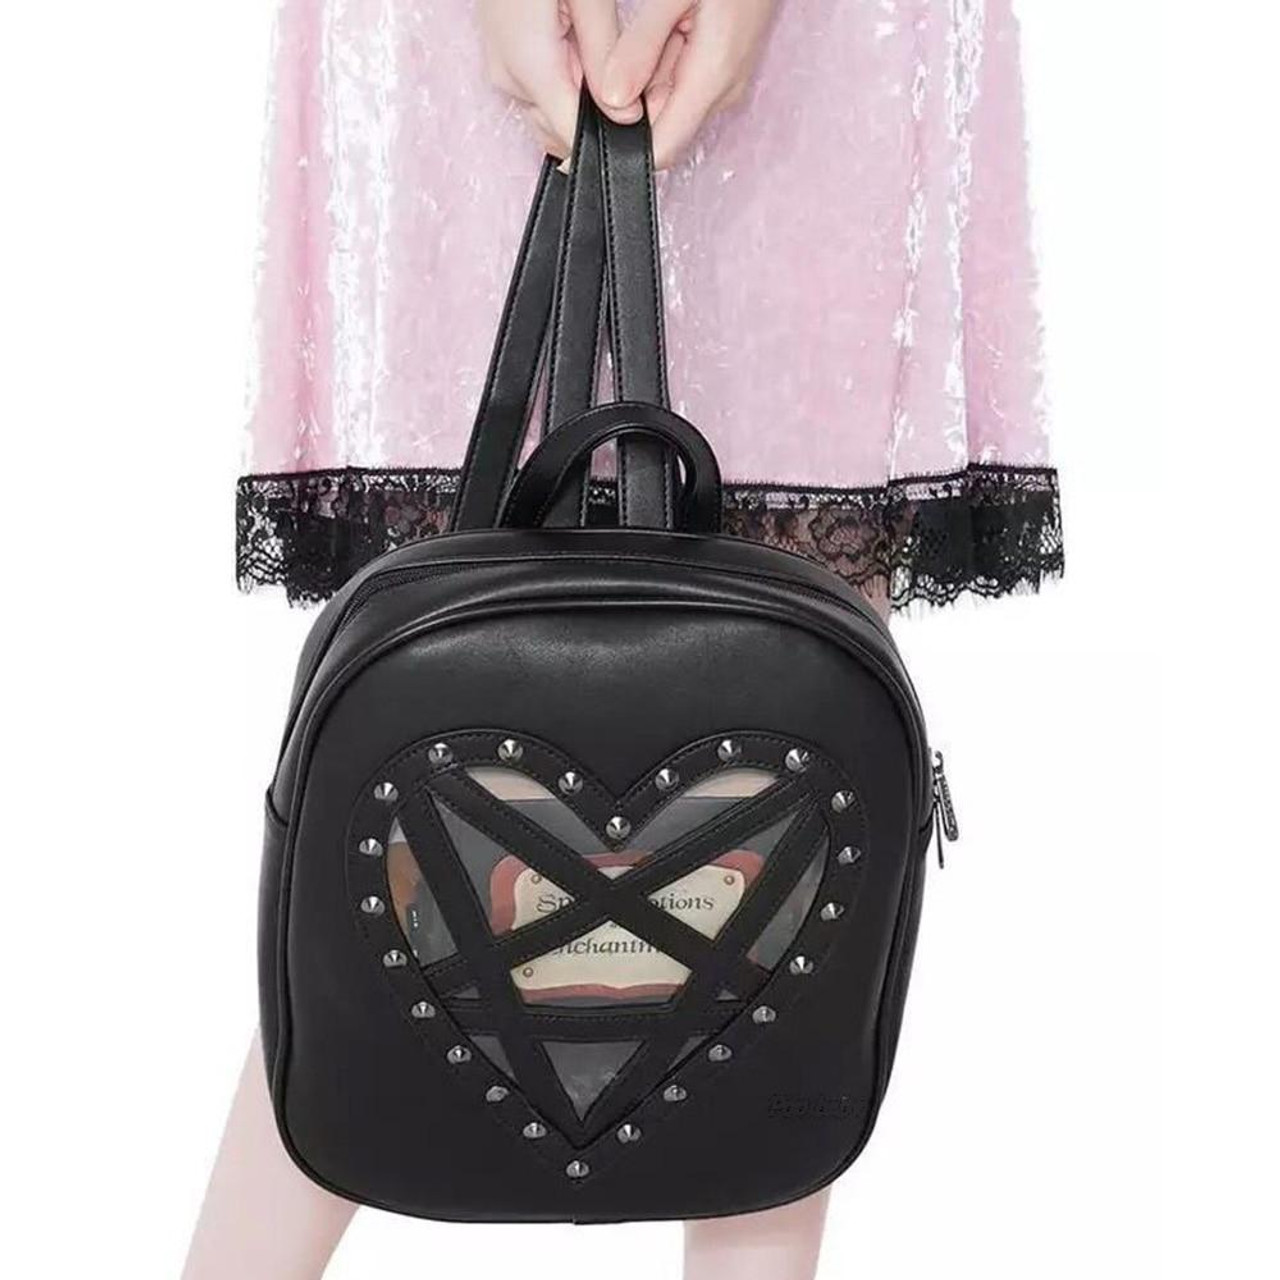 Heart Shaped Leather Backpack, Black